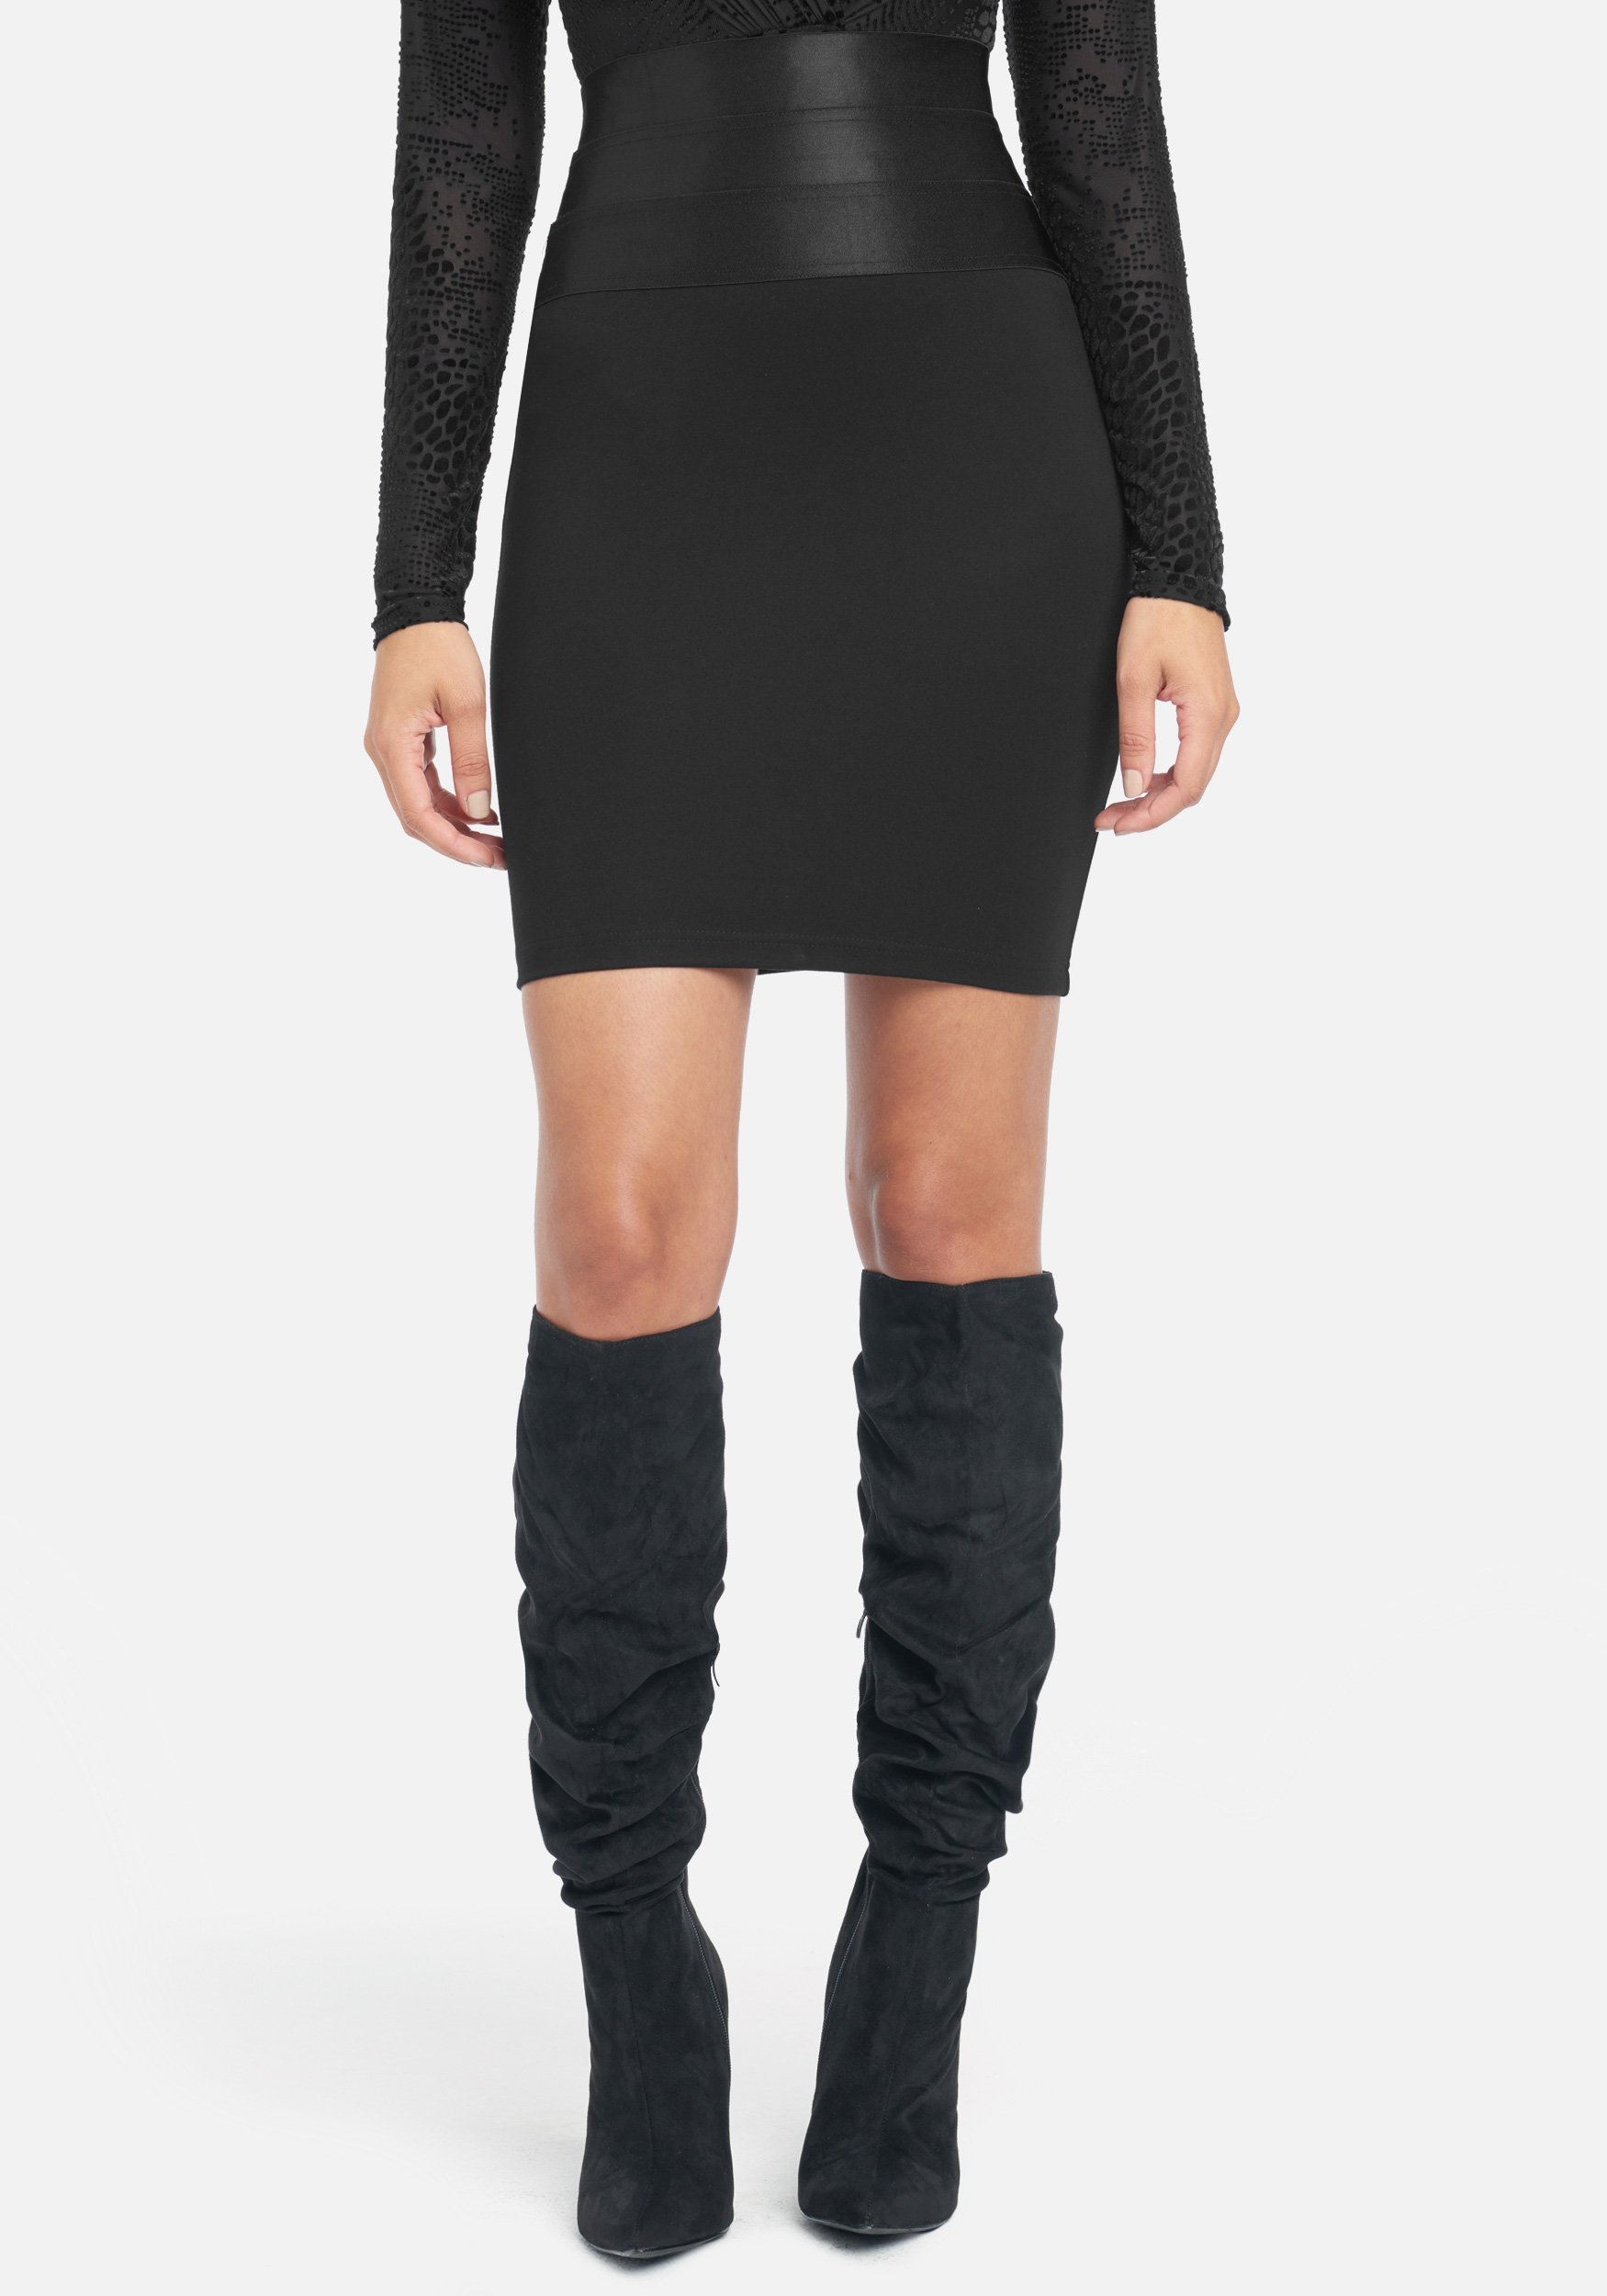 Bebe Women's Satin Elastic Waist Skirt, Size XL in Black Spandex/Nylon